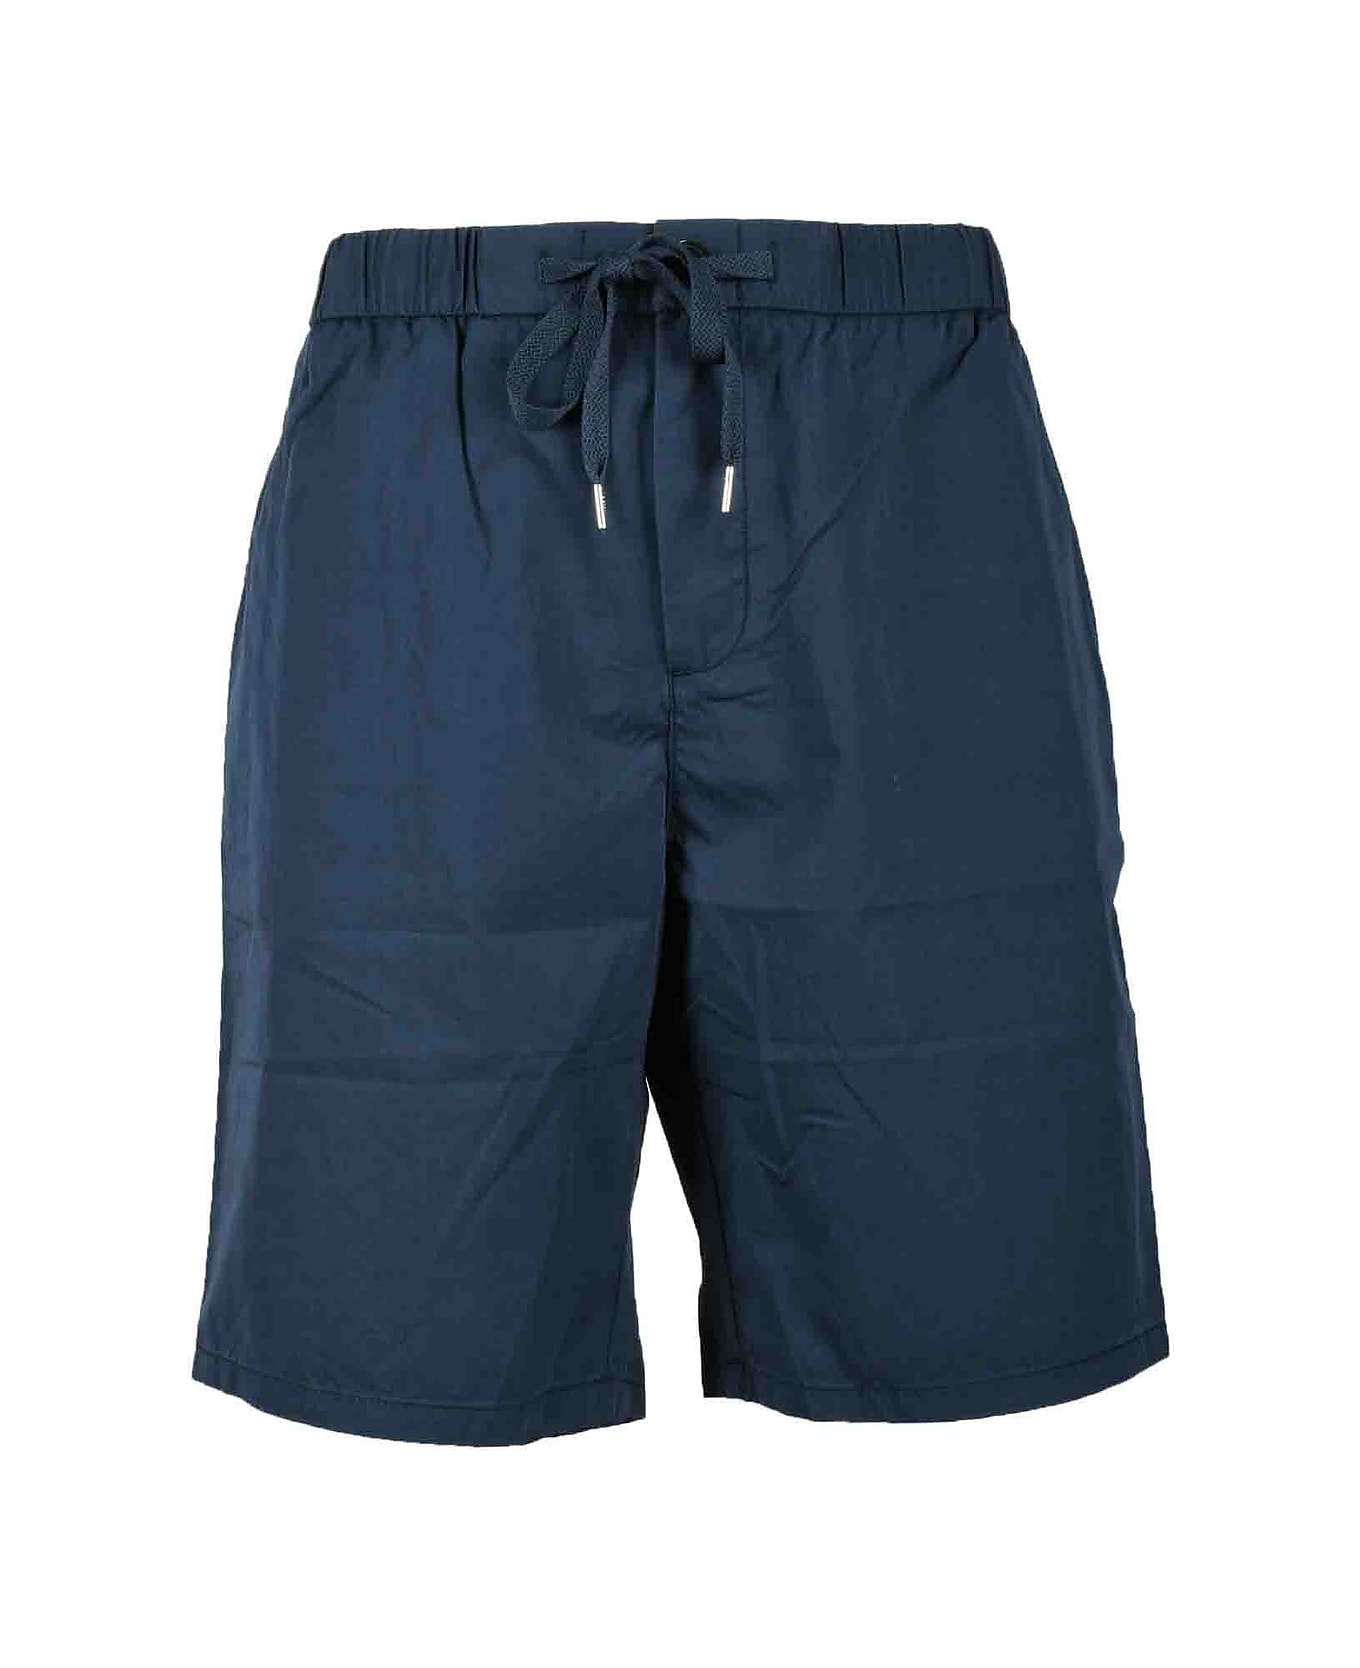 Sun 68 Men's Blue Bermuda Shorts - Blue